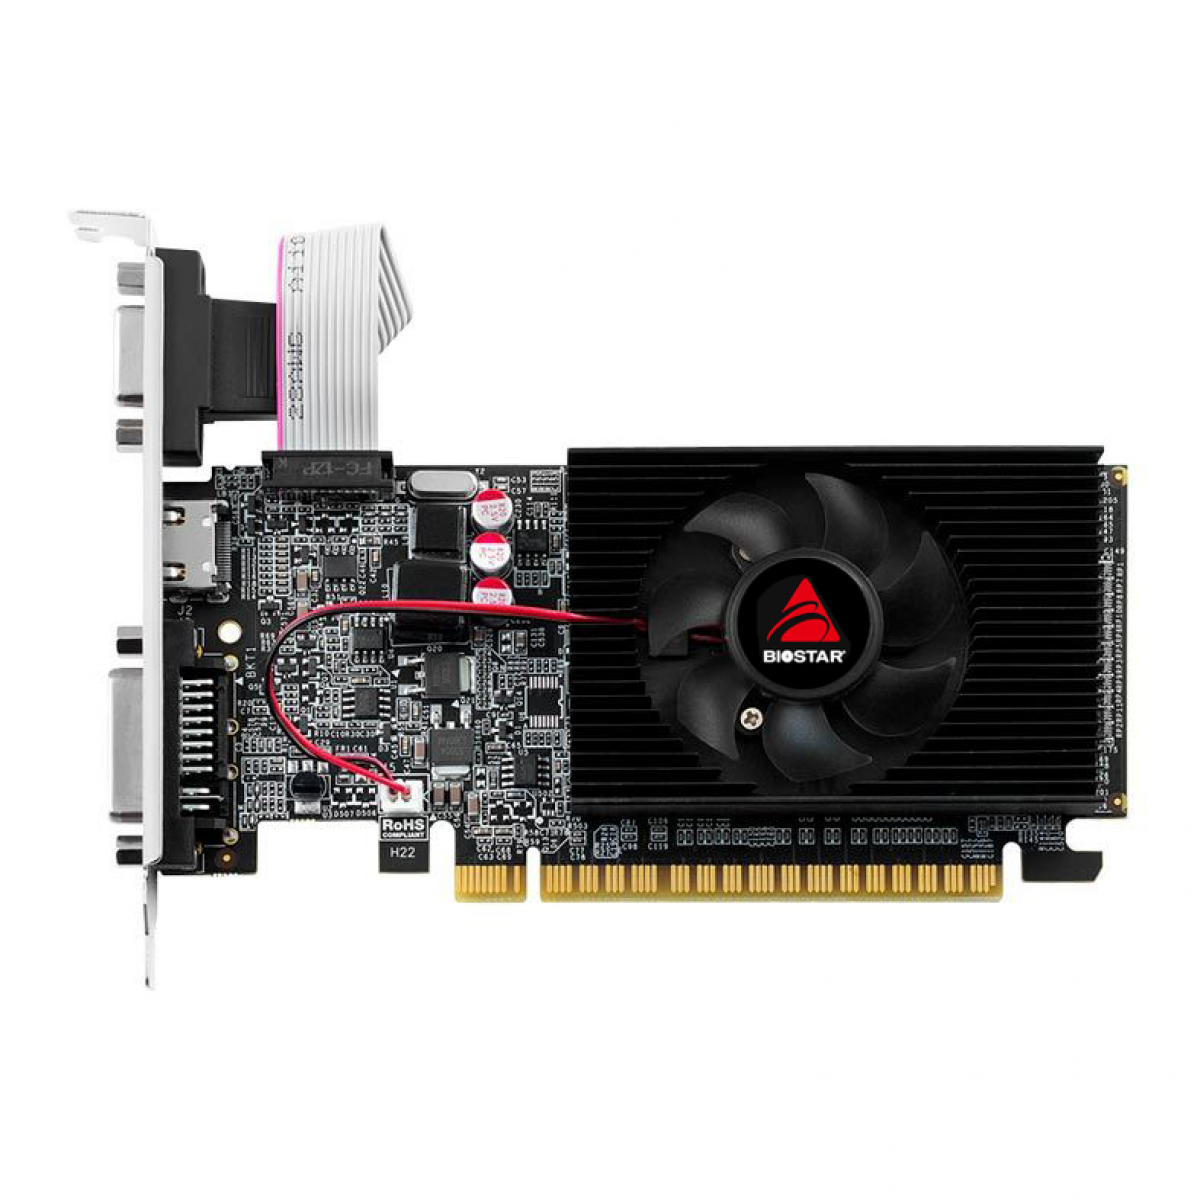 Kit Upgrade Biostar Geforce GT 610 + Ryzen 3 3300x + Biostar A320MH + Memória DDR4 16GB (2x8GB) 3000MHz + Cooler de Brinde